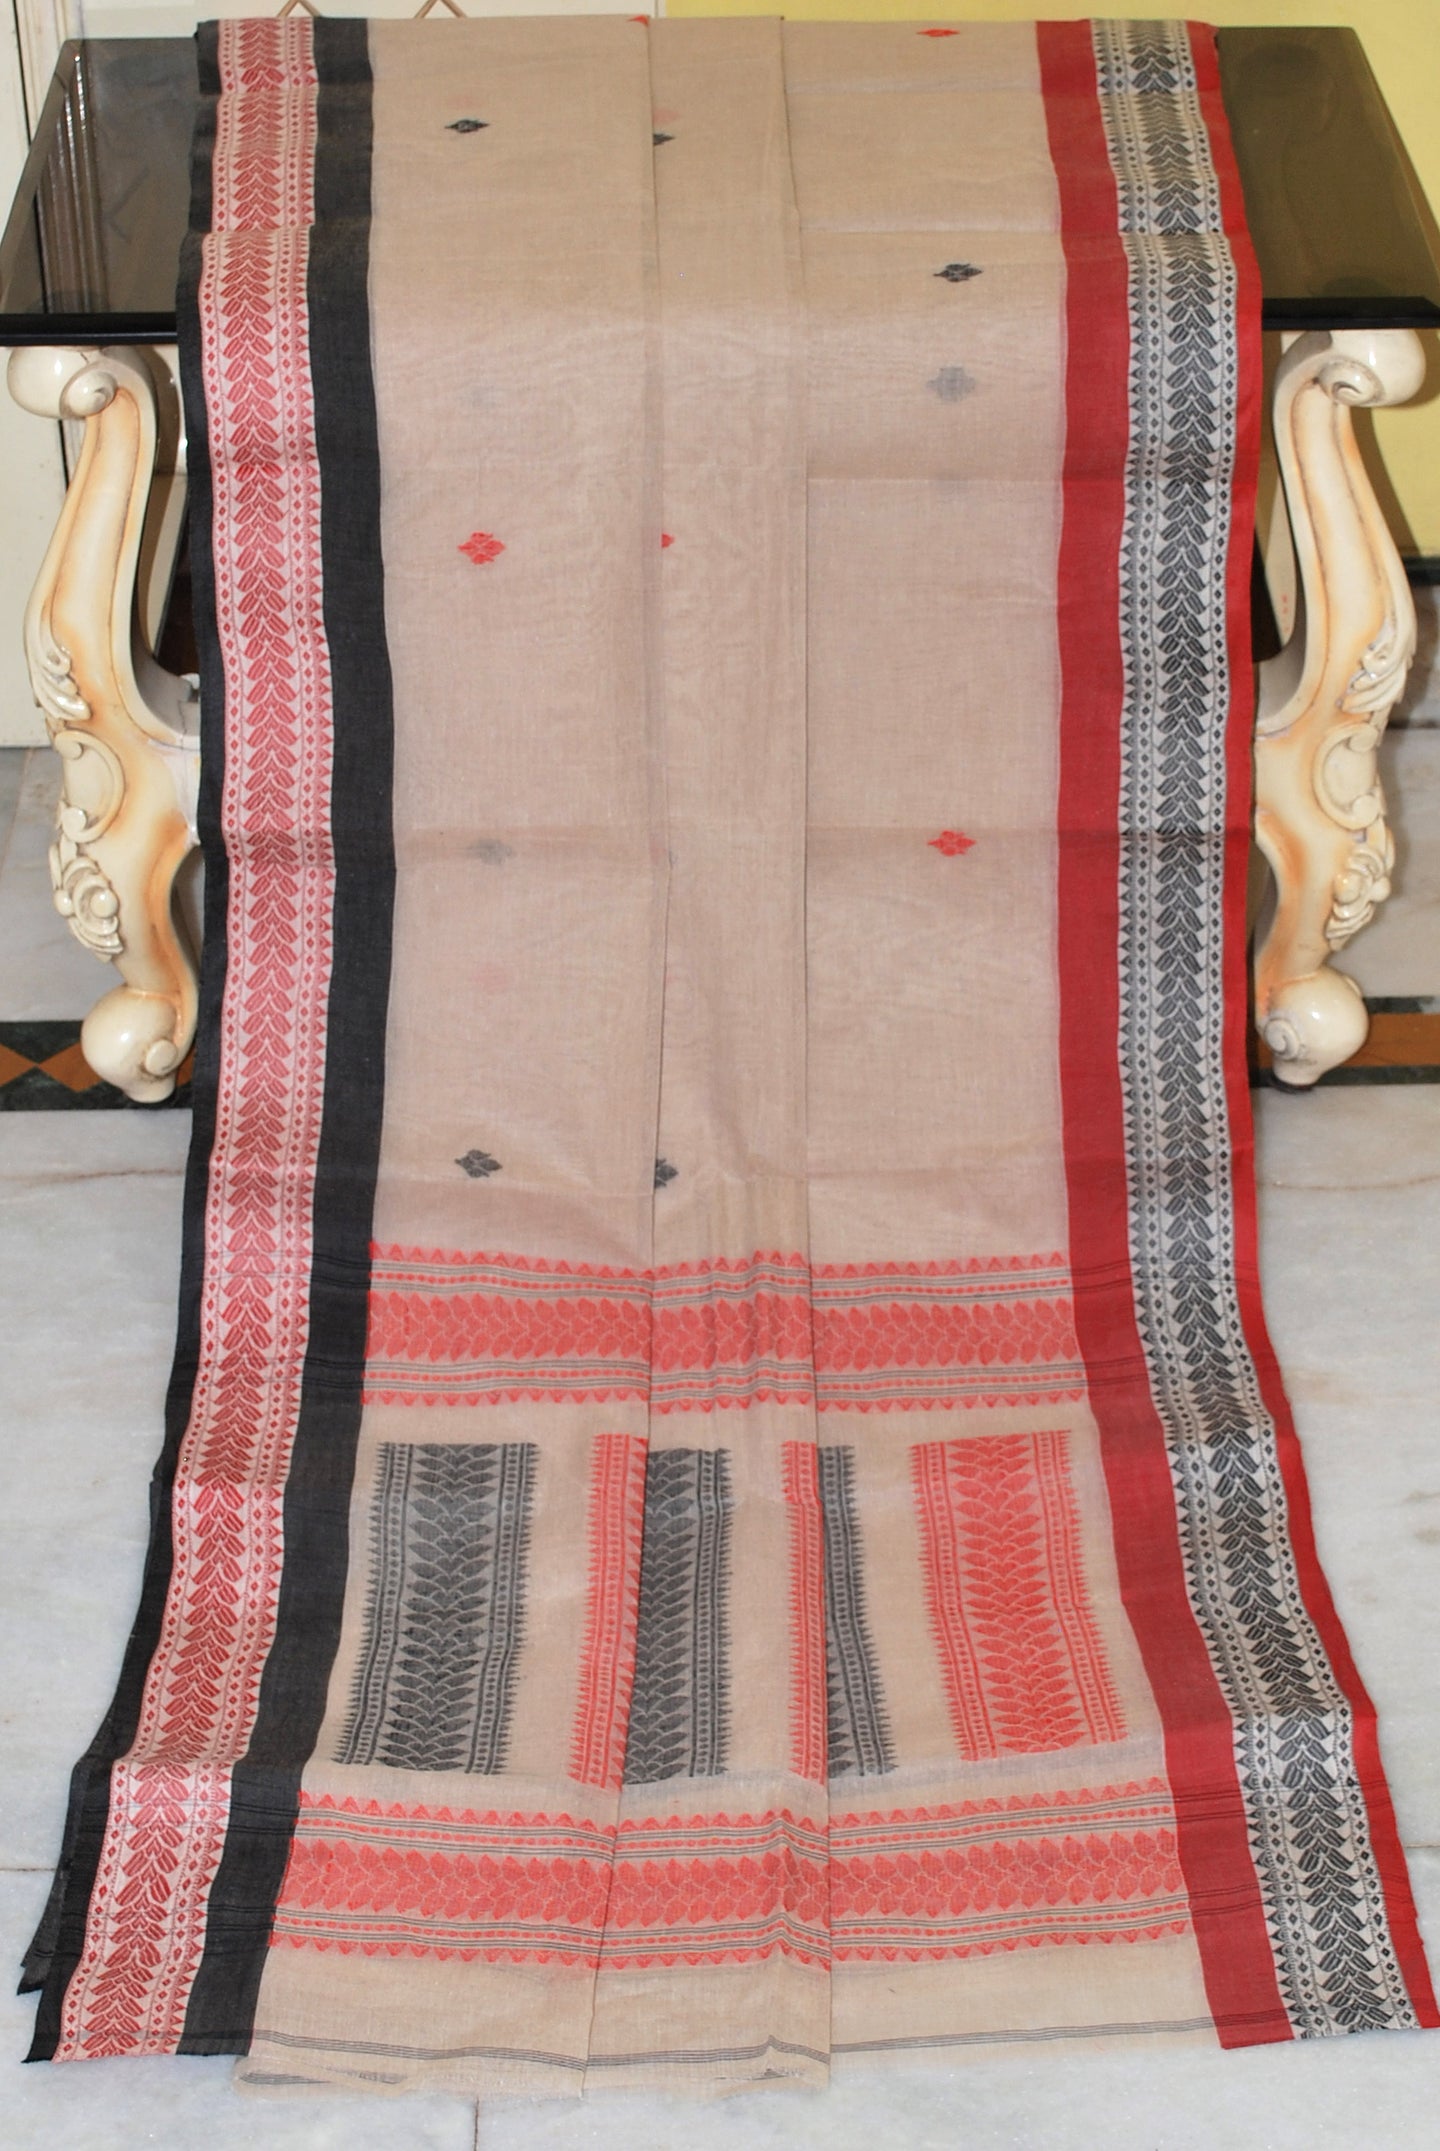 Sil Nakshi Border Bengal Handloom Cotton Bomkai Saree in Beige, Red and Black Thread Work